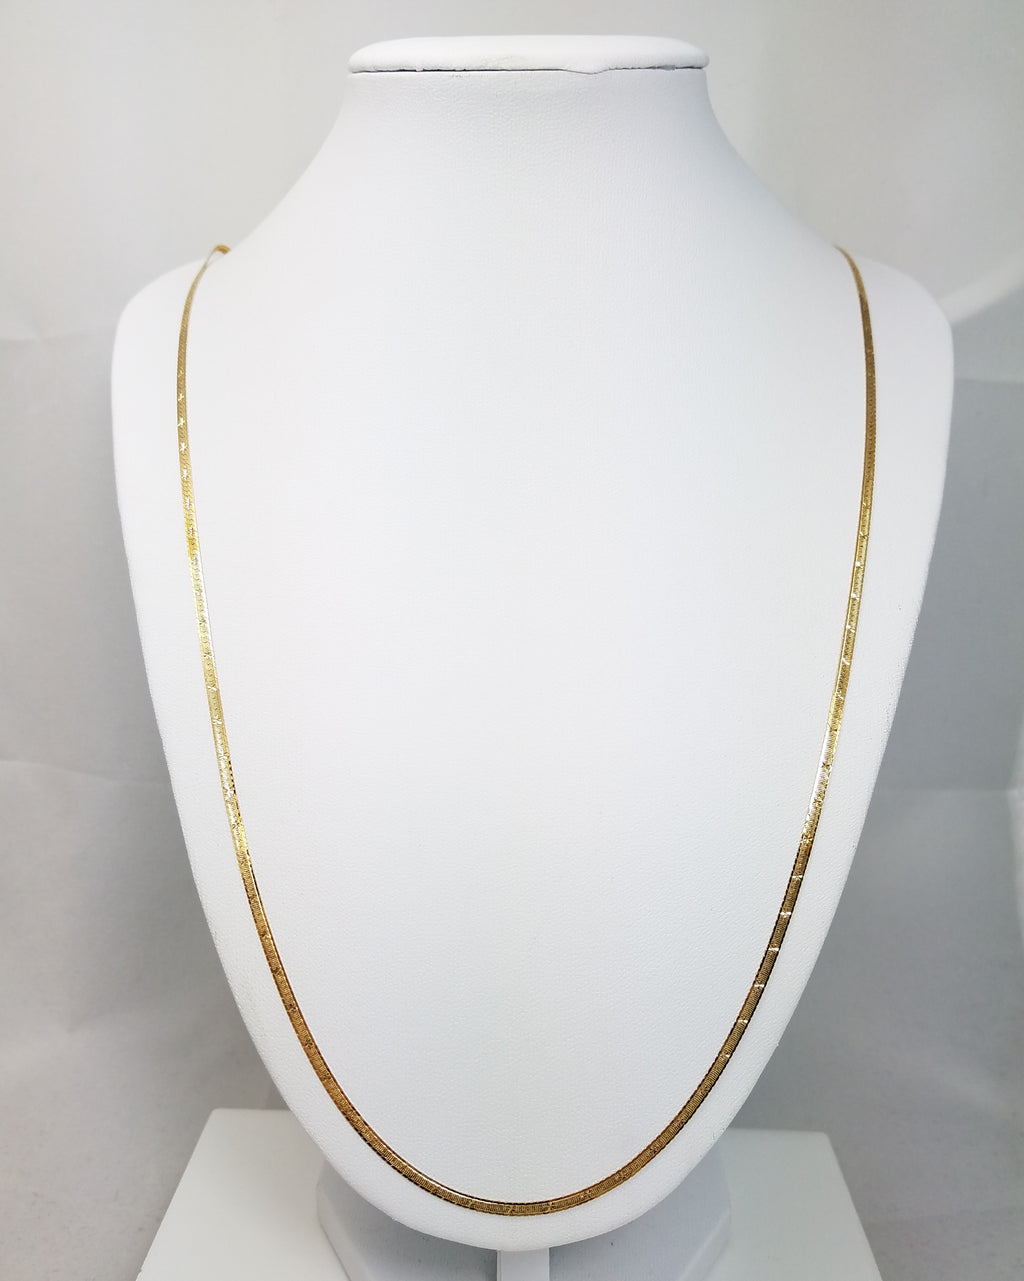 Fantastic 30" 14k Solid Gold Diamond Cut Italian Herringbone Chain Necklace